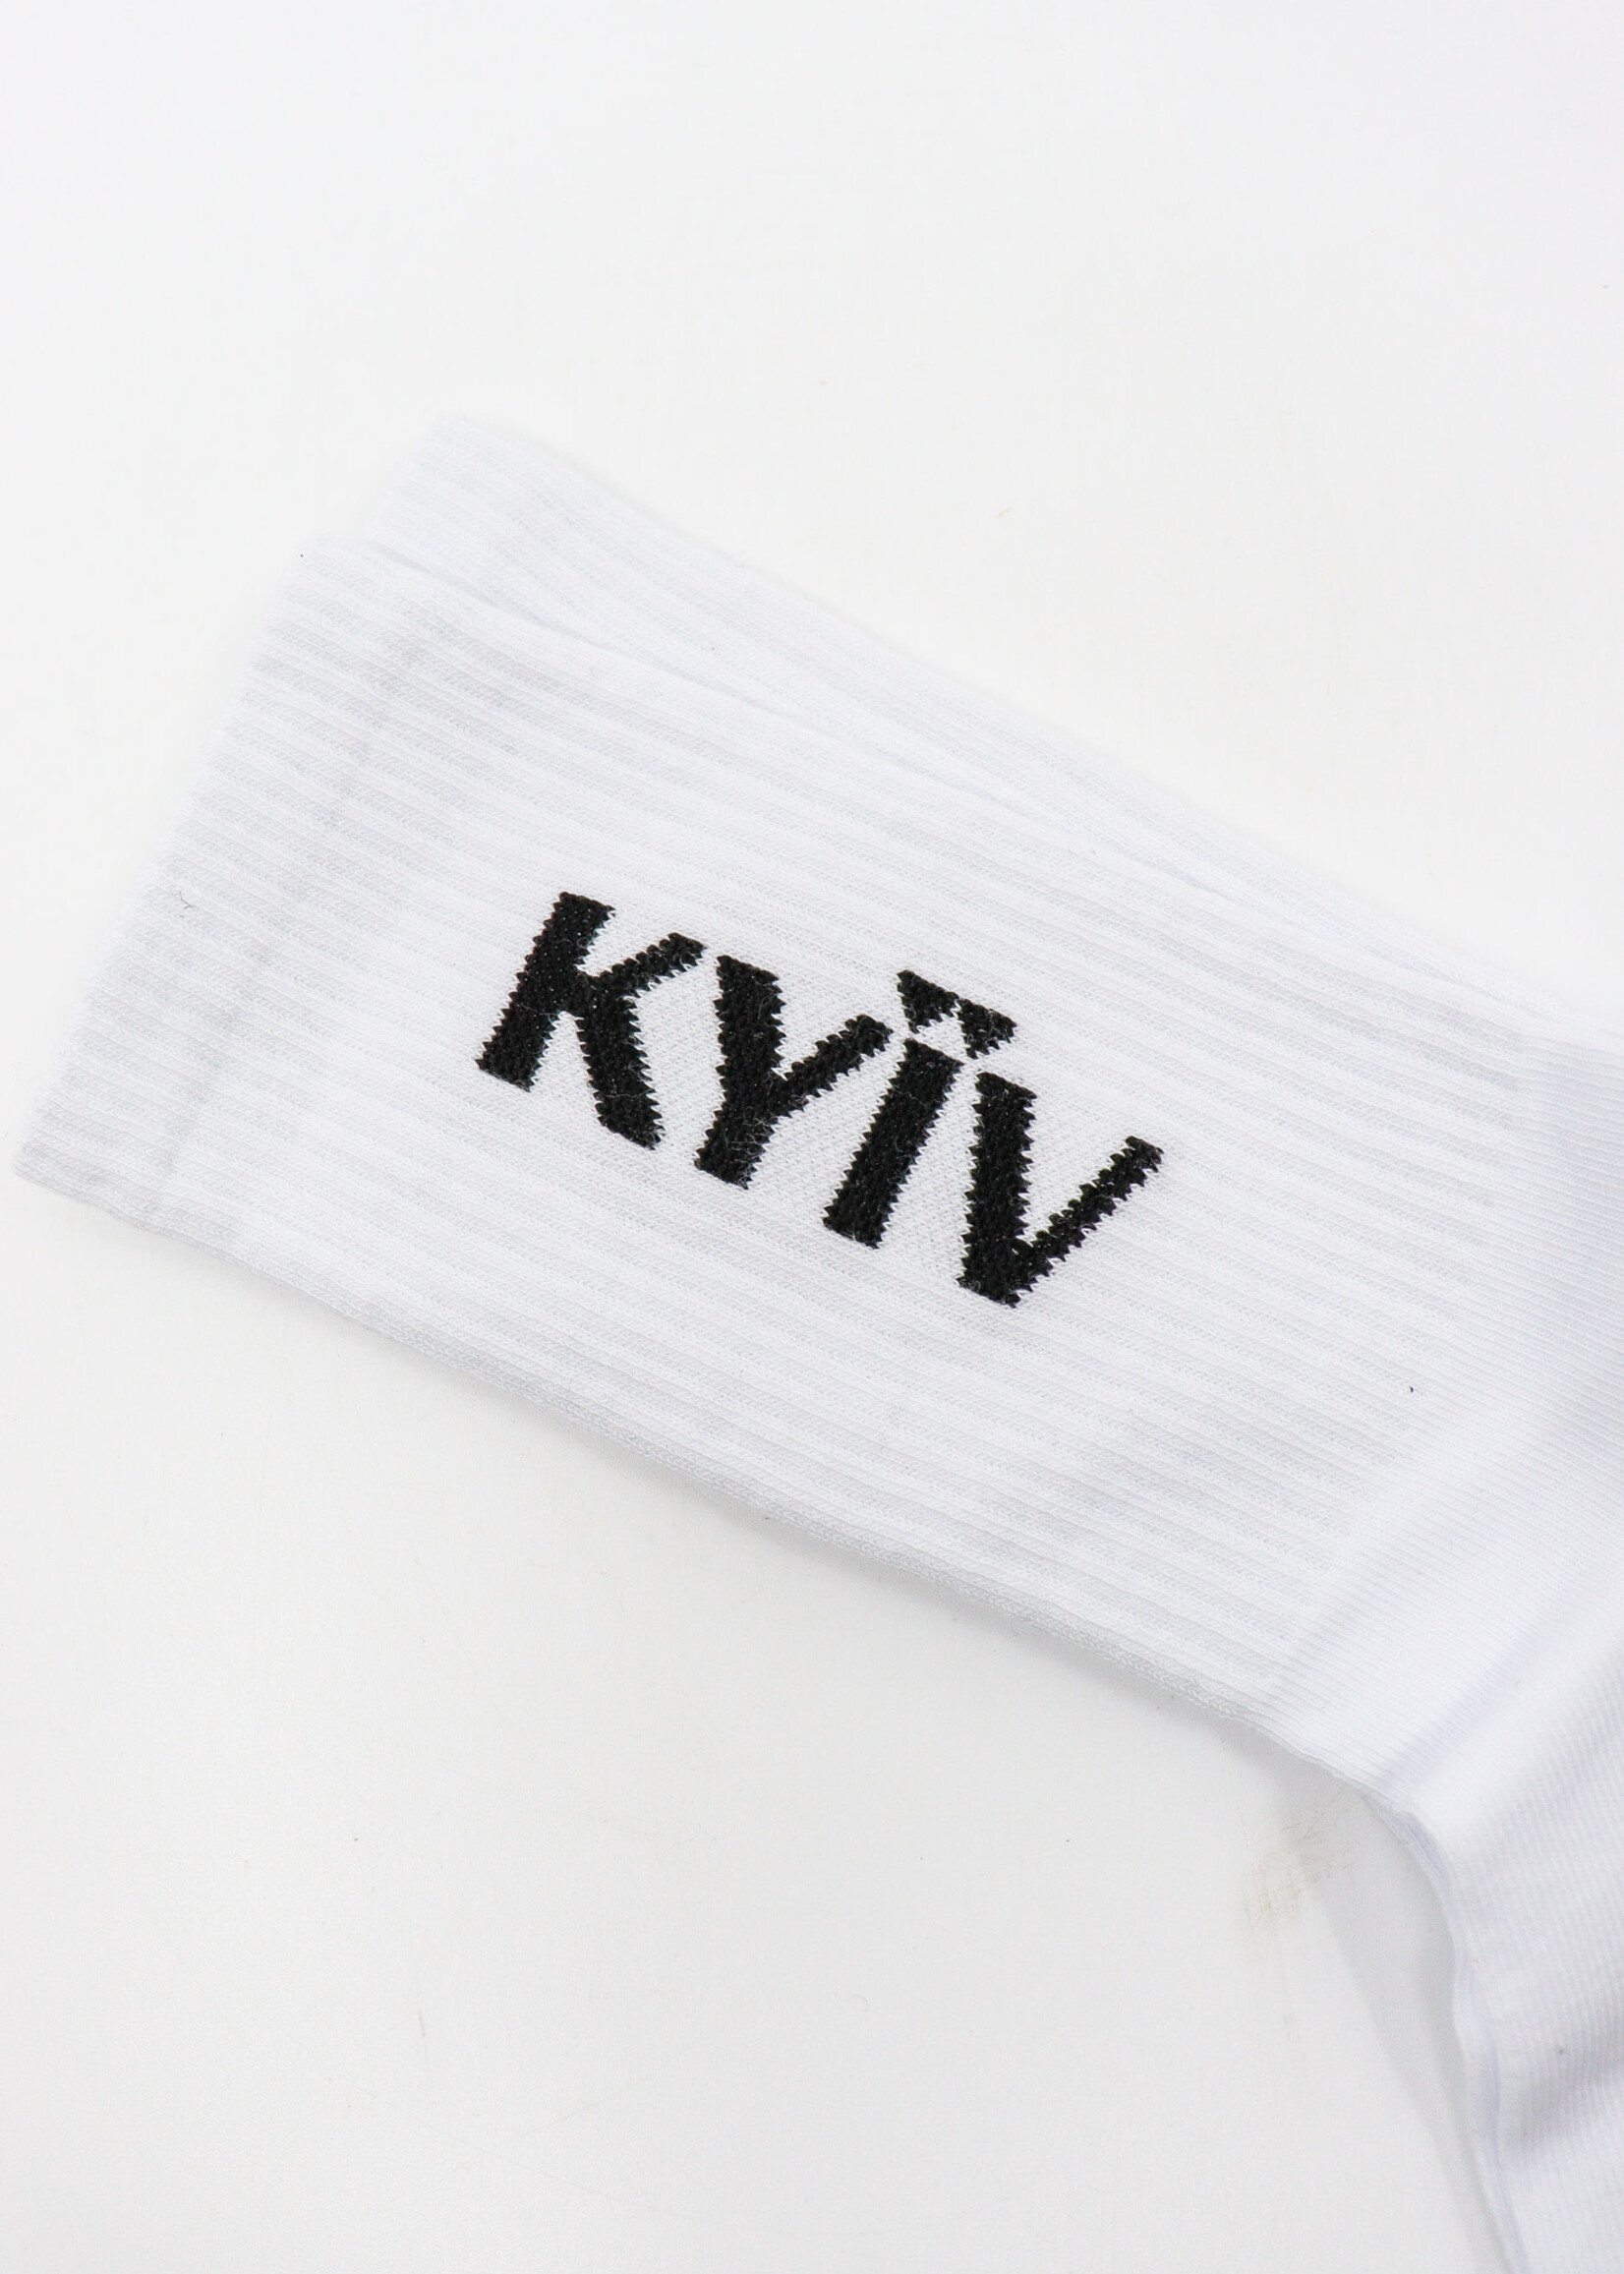 APPAREL - Kyiv Day/ White socks  / made in Ukraine